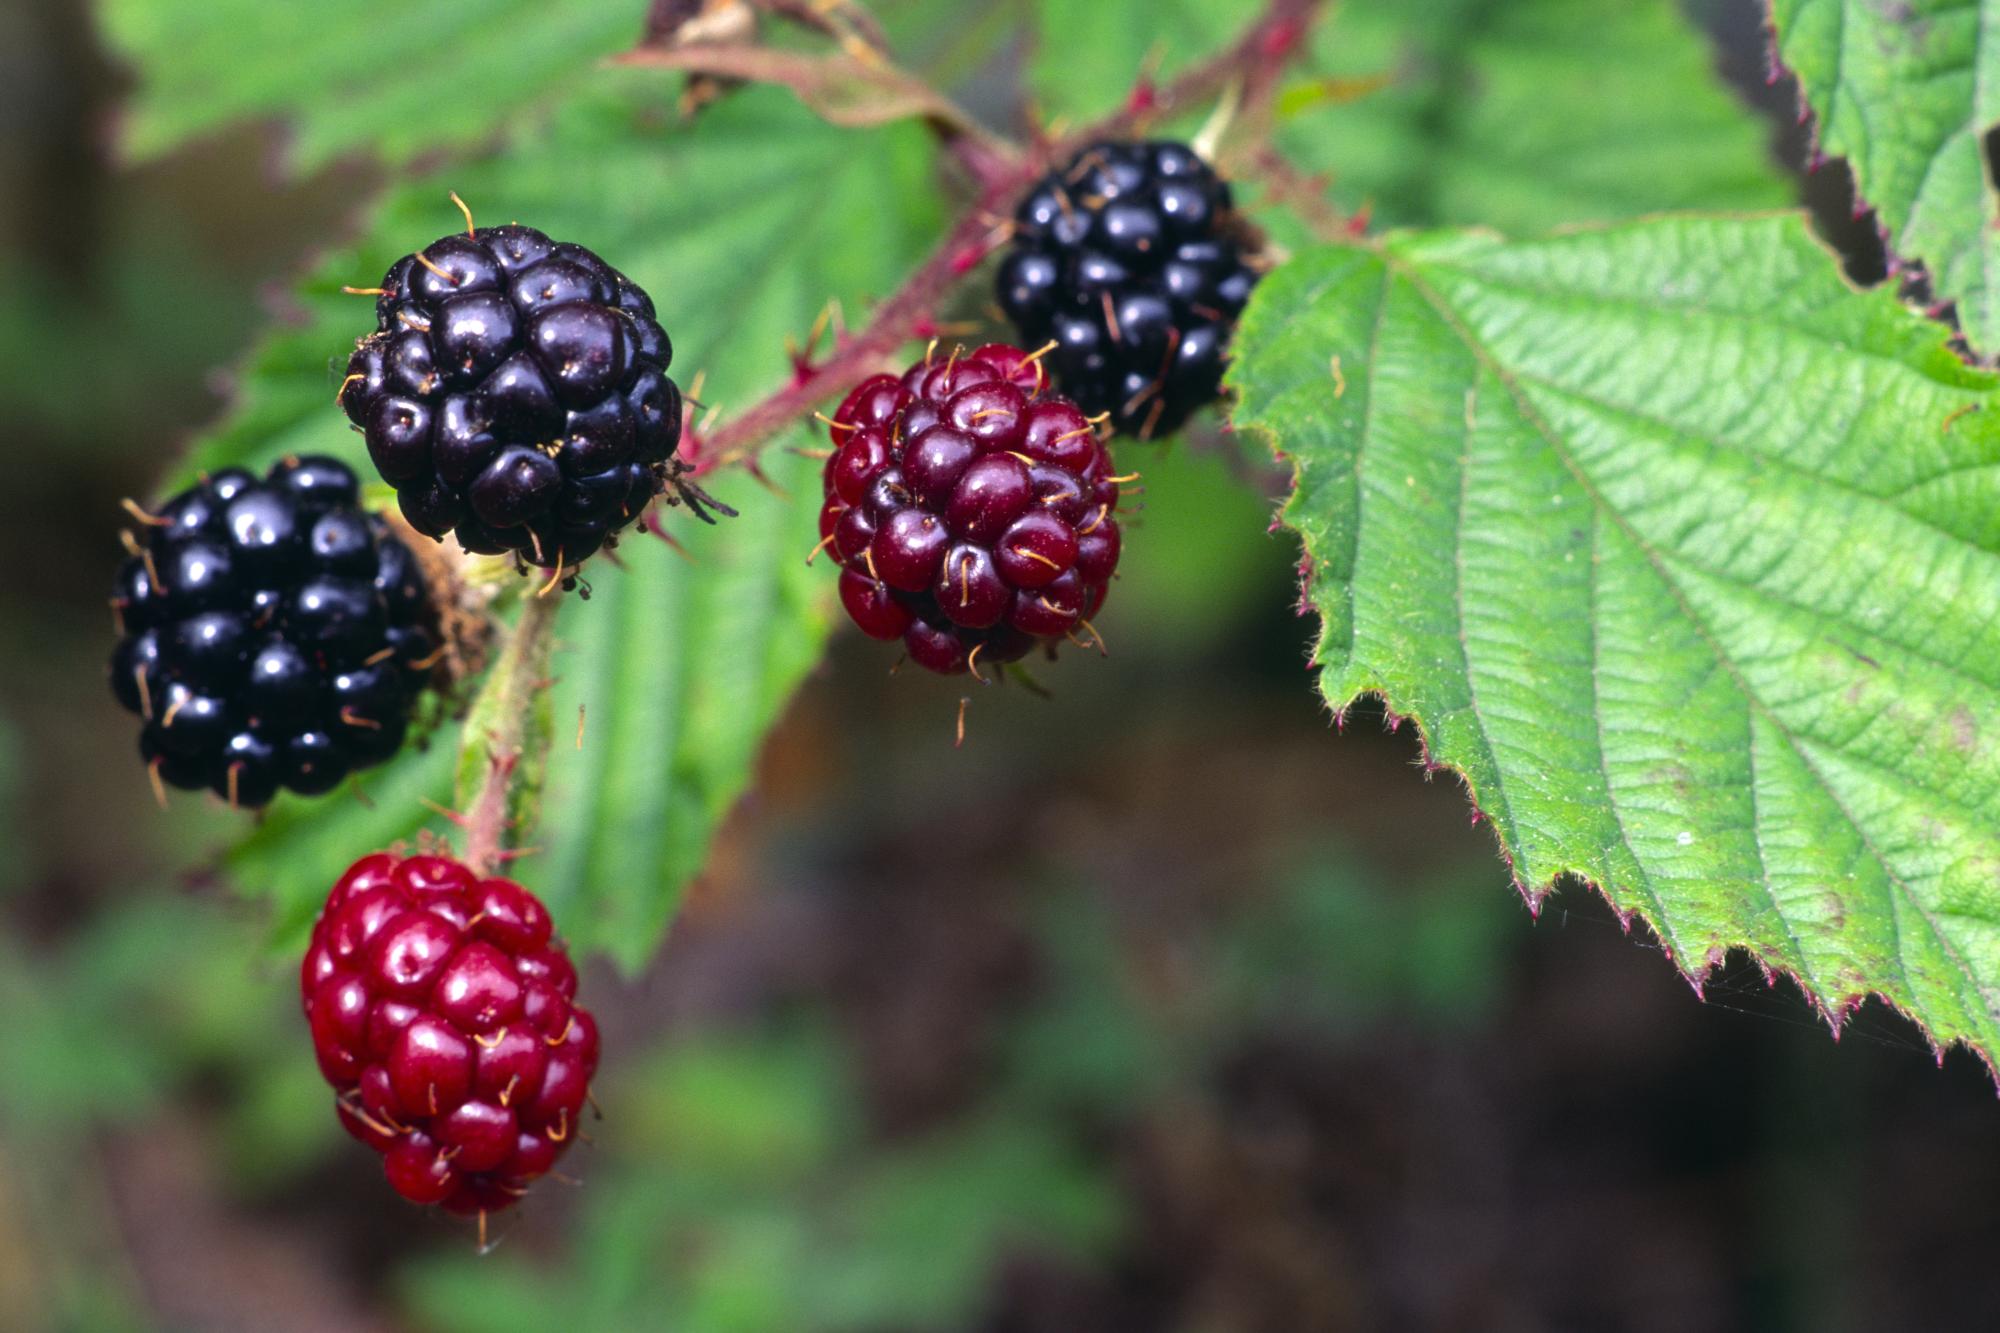 Bramble or Blackberry fruits. ©Lorne Gill/SNH